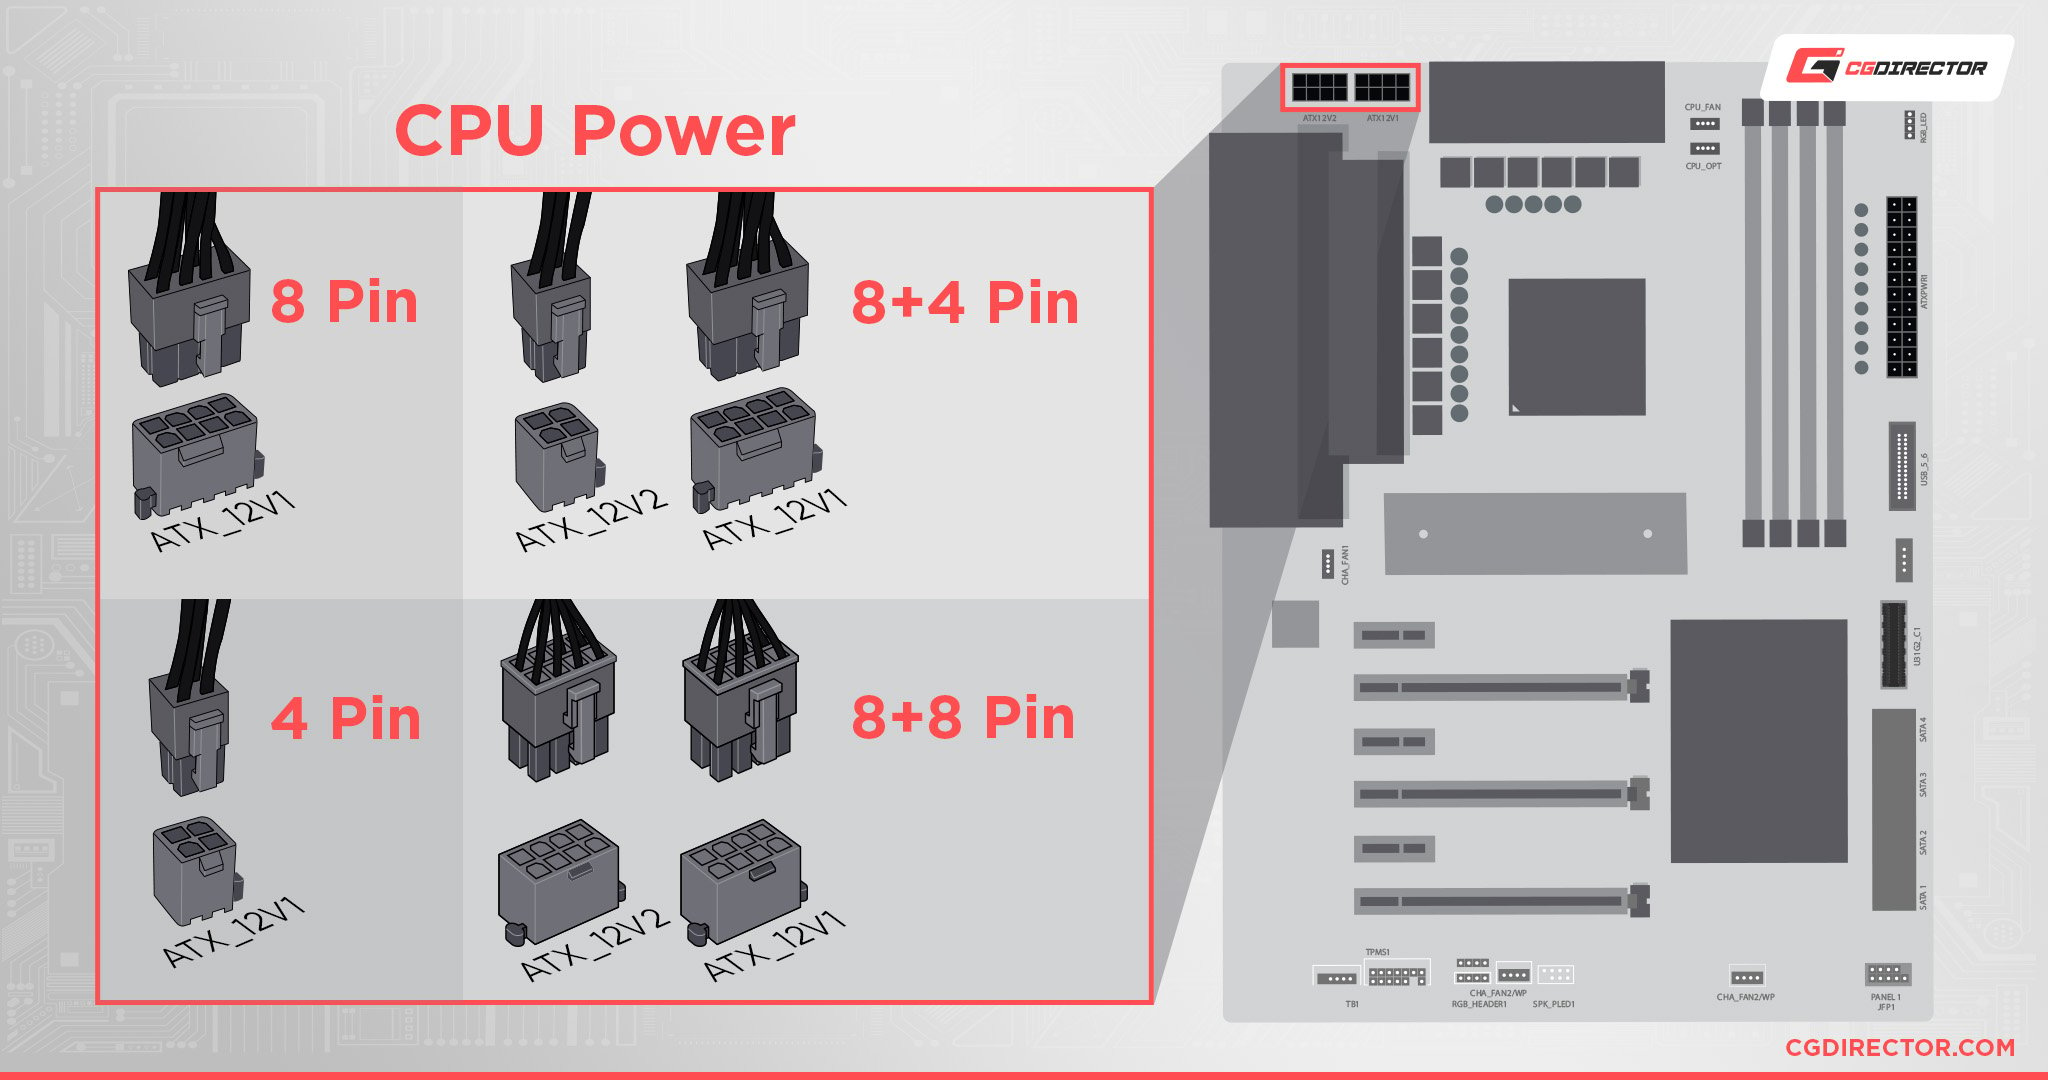 CPU Power connectors